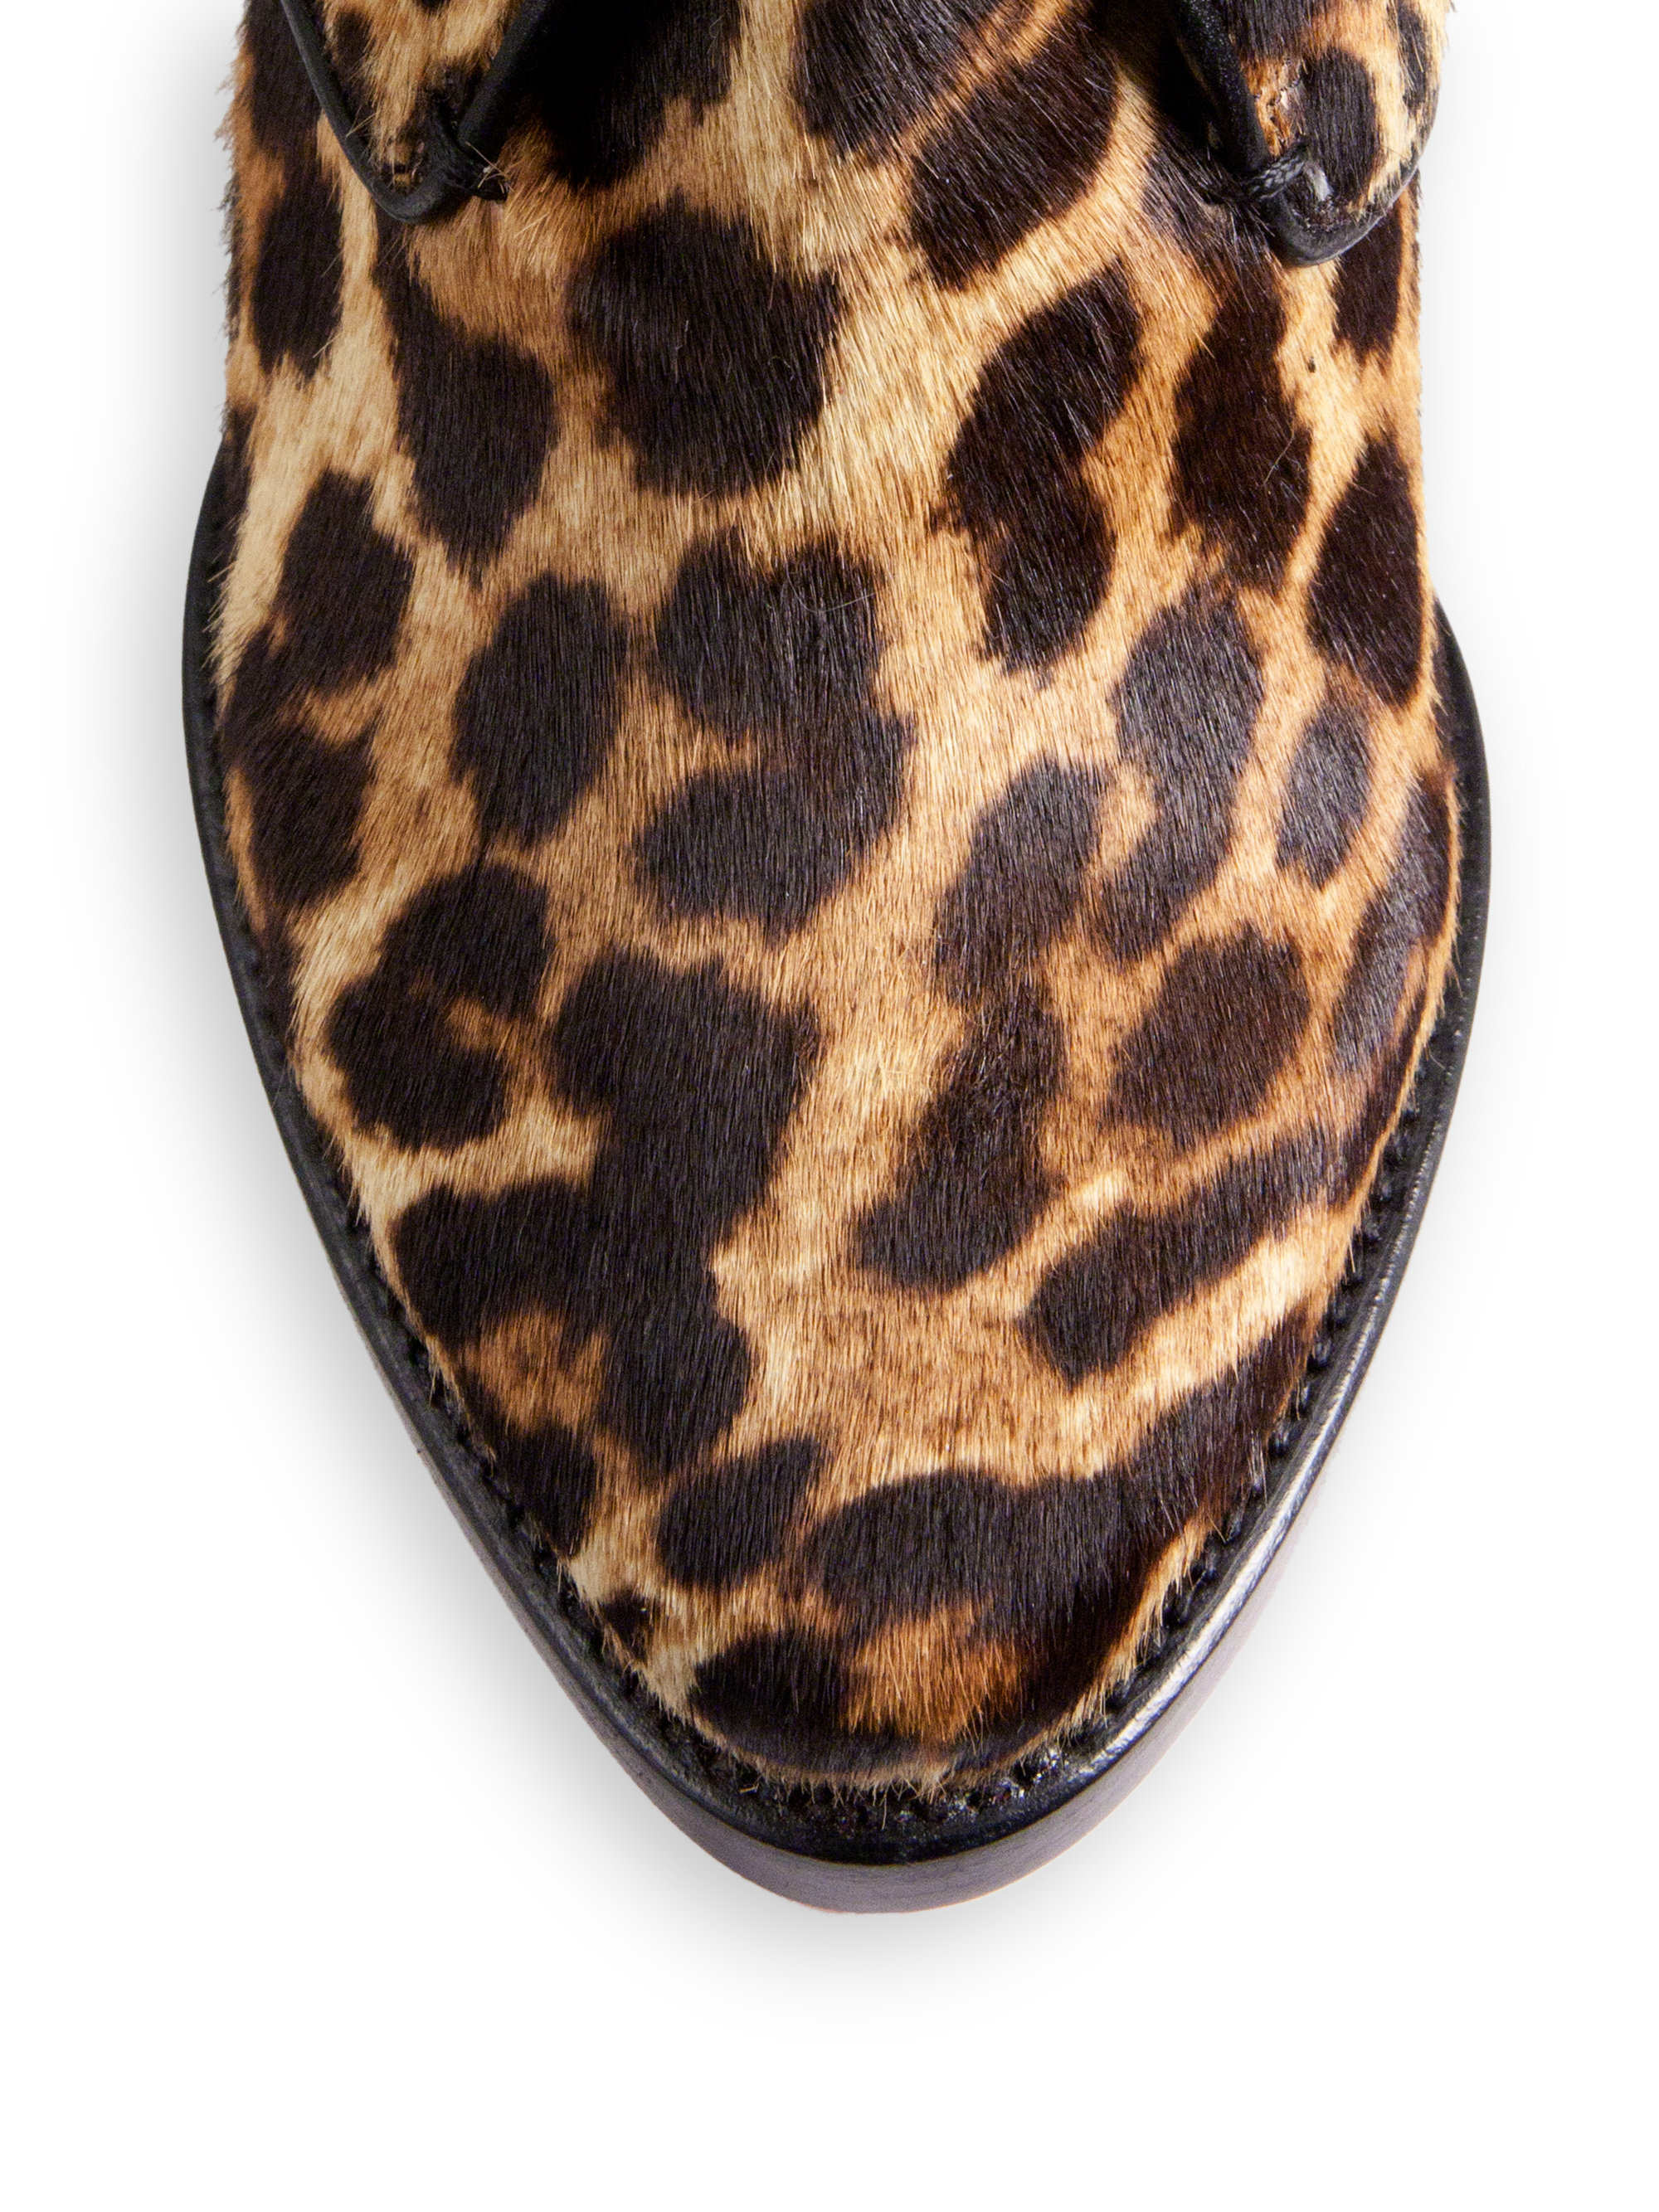 christian louboutin replica heels - christian louboutin wedge booties Brown and tan ponyhair leopard ...